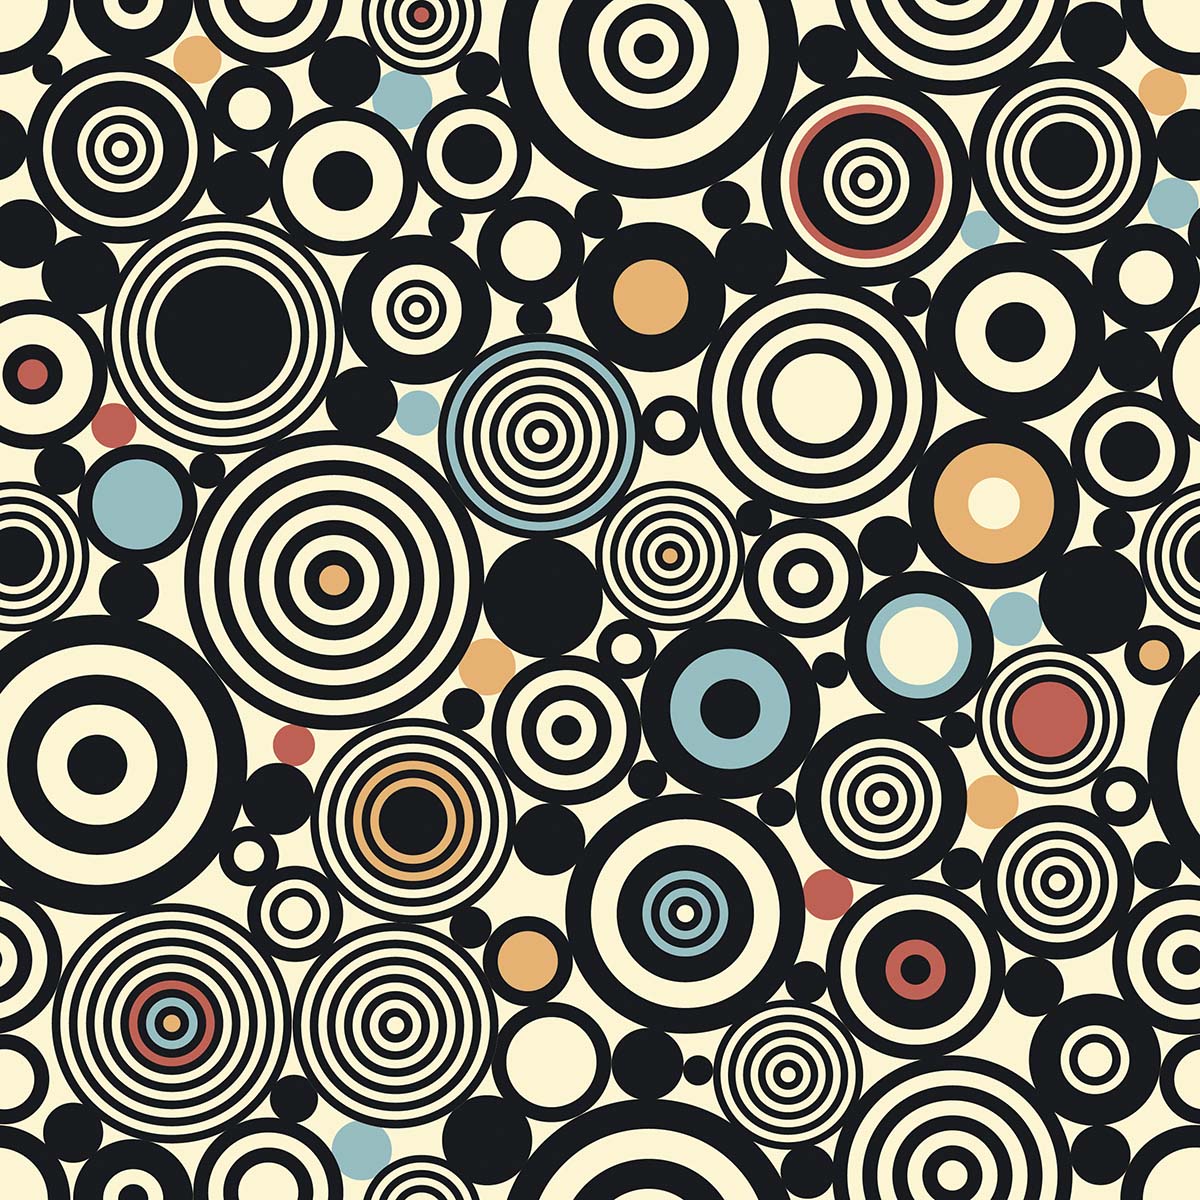 A pattern of circles and dots